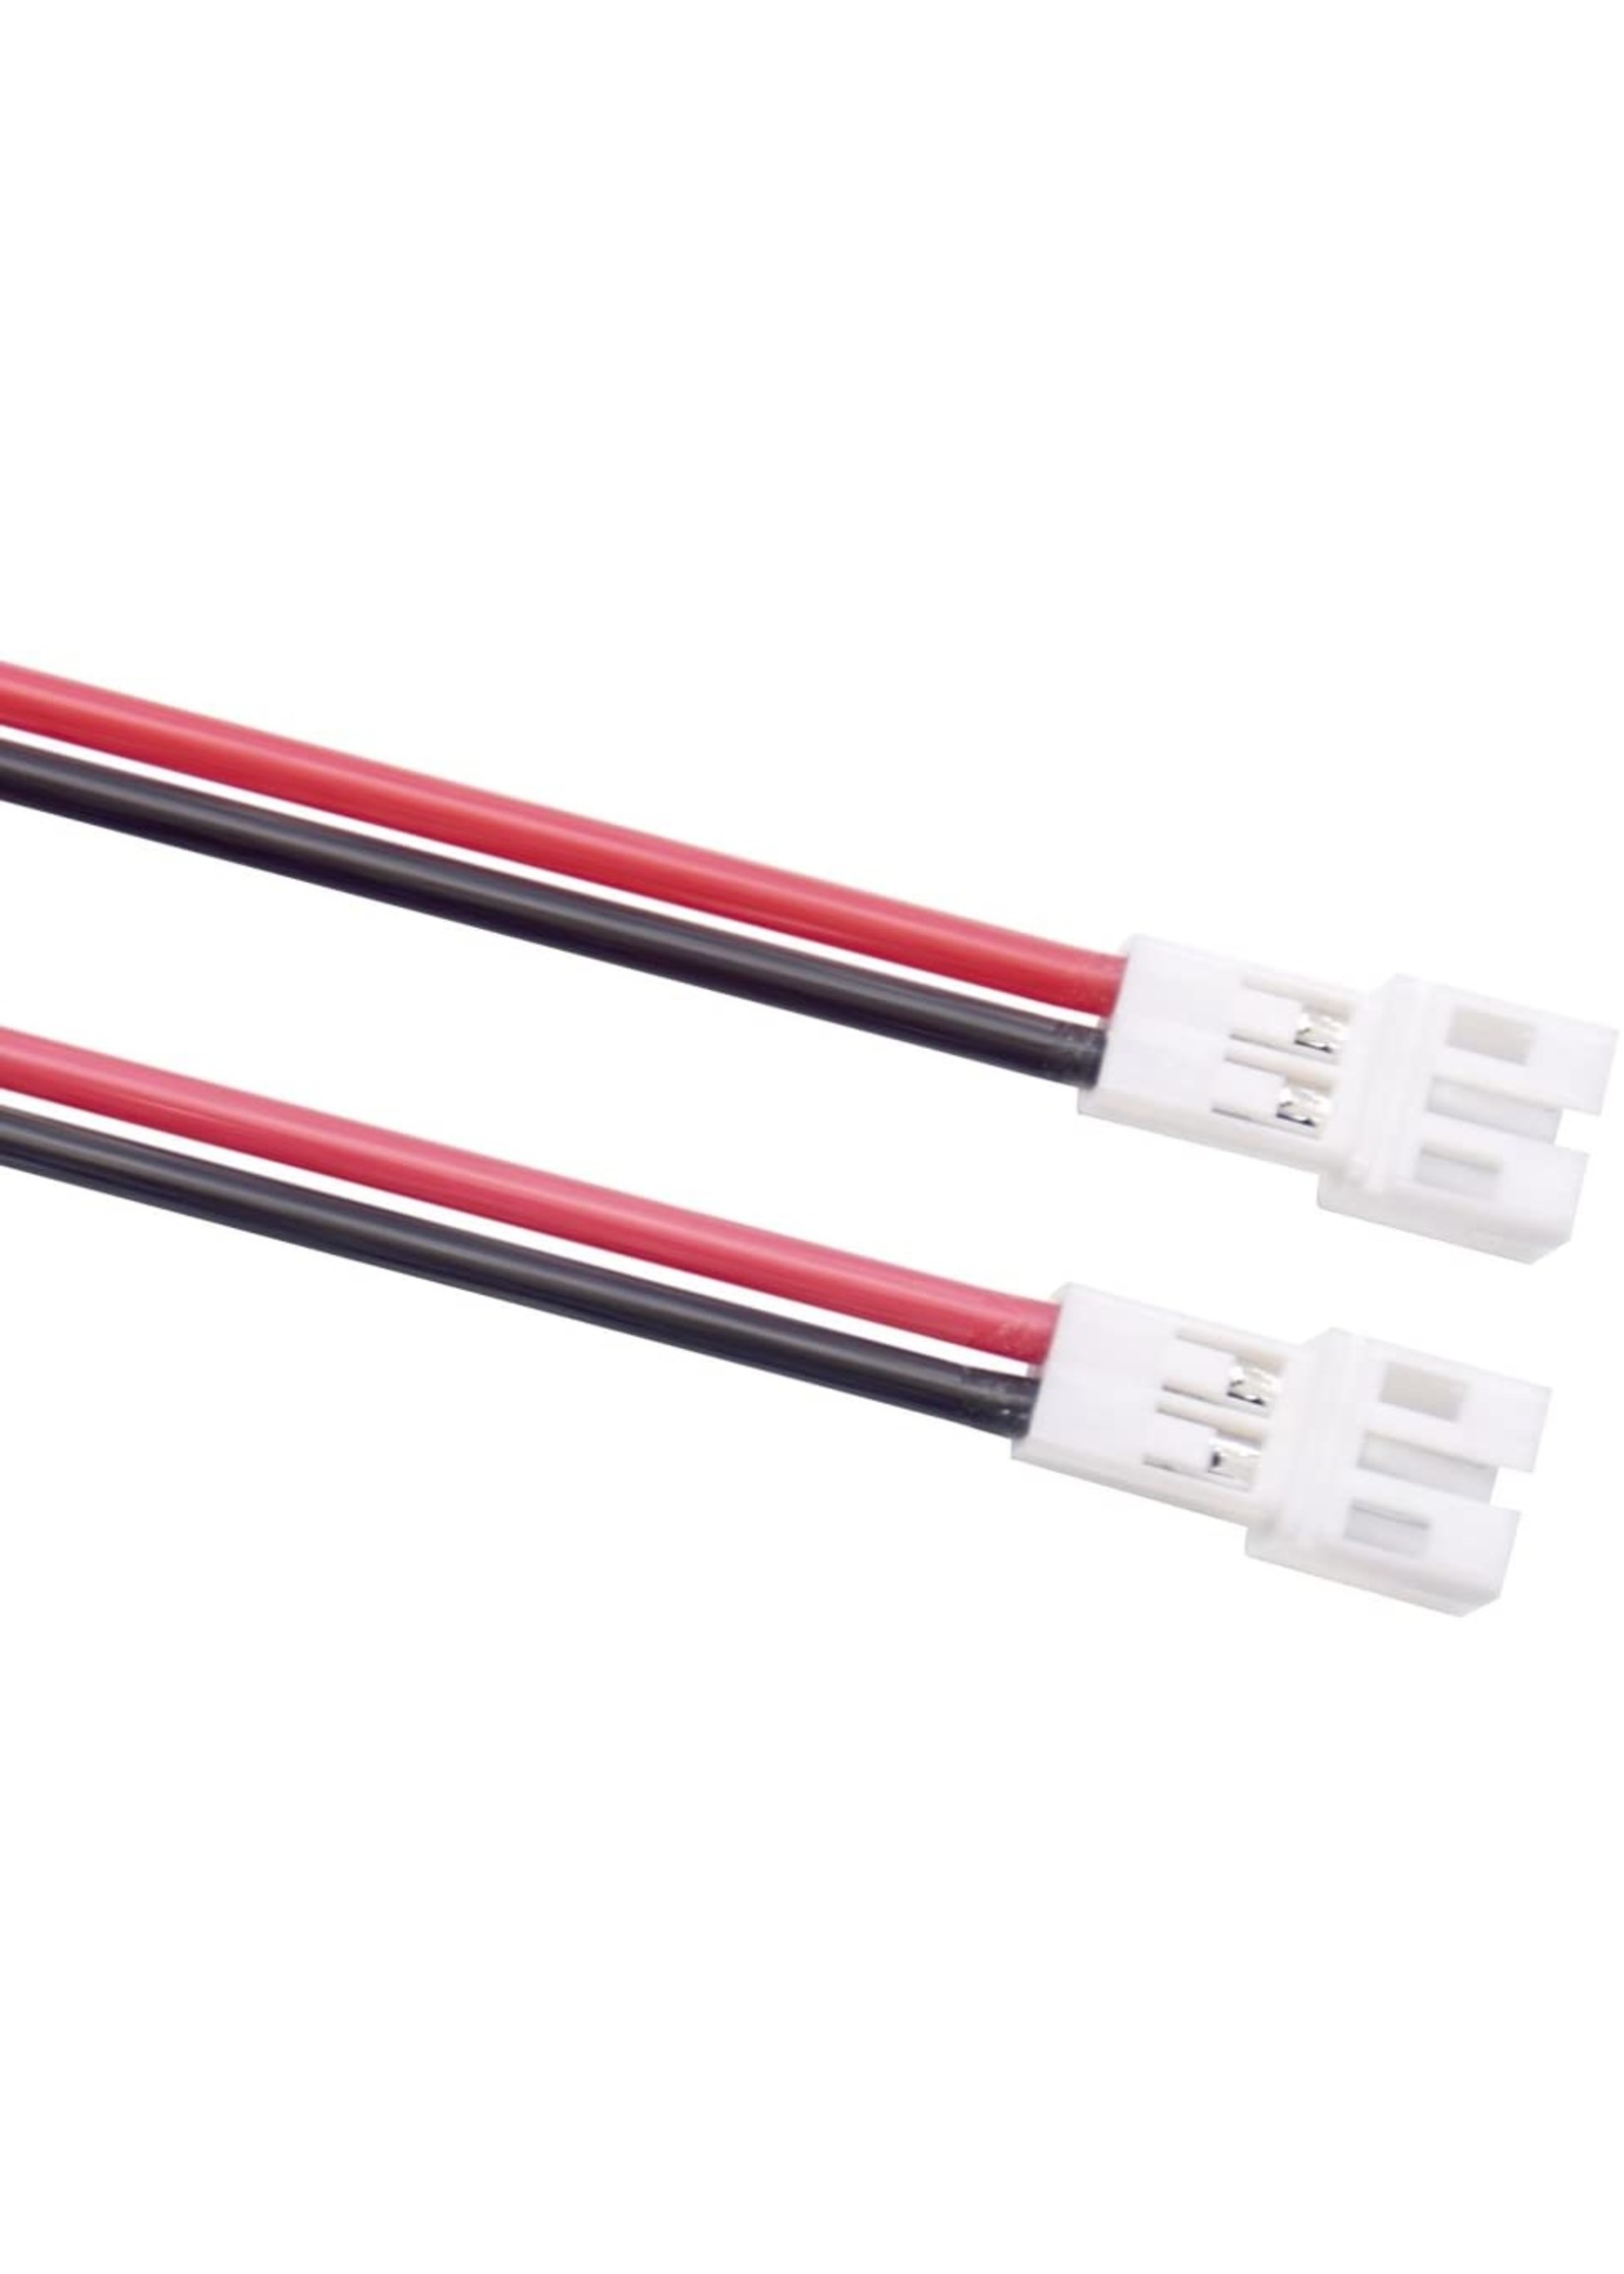 BetaFPV 312657 - JST-PH 2.0 Female Connector Cable Set (4)